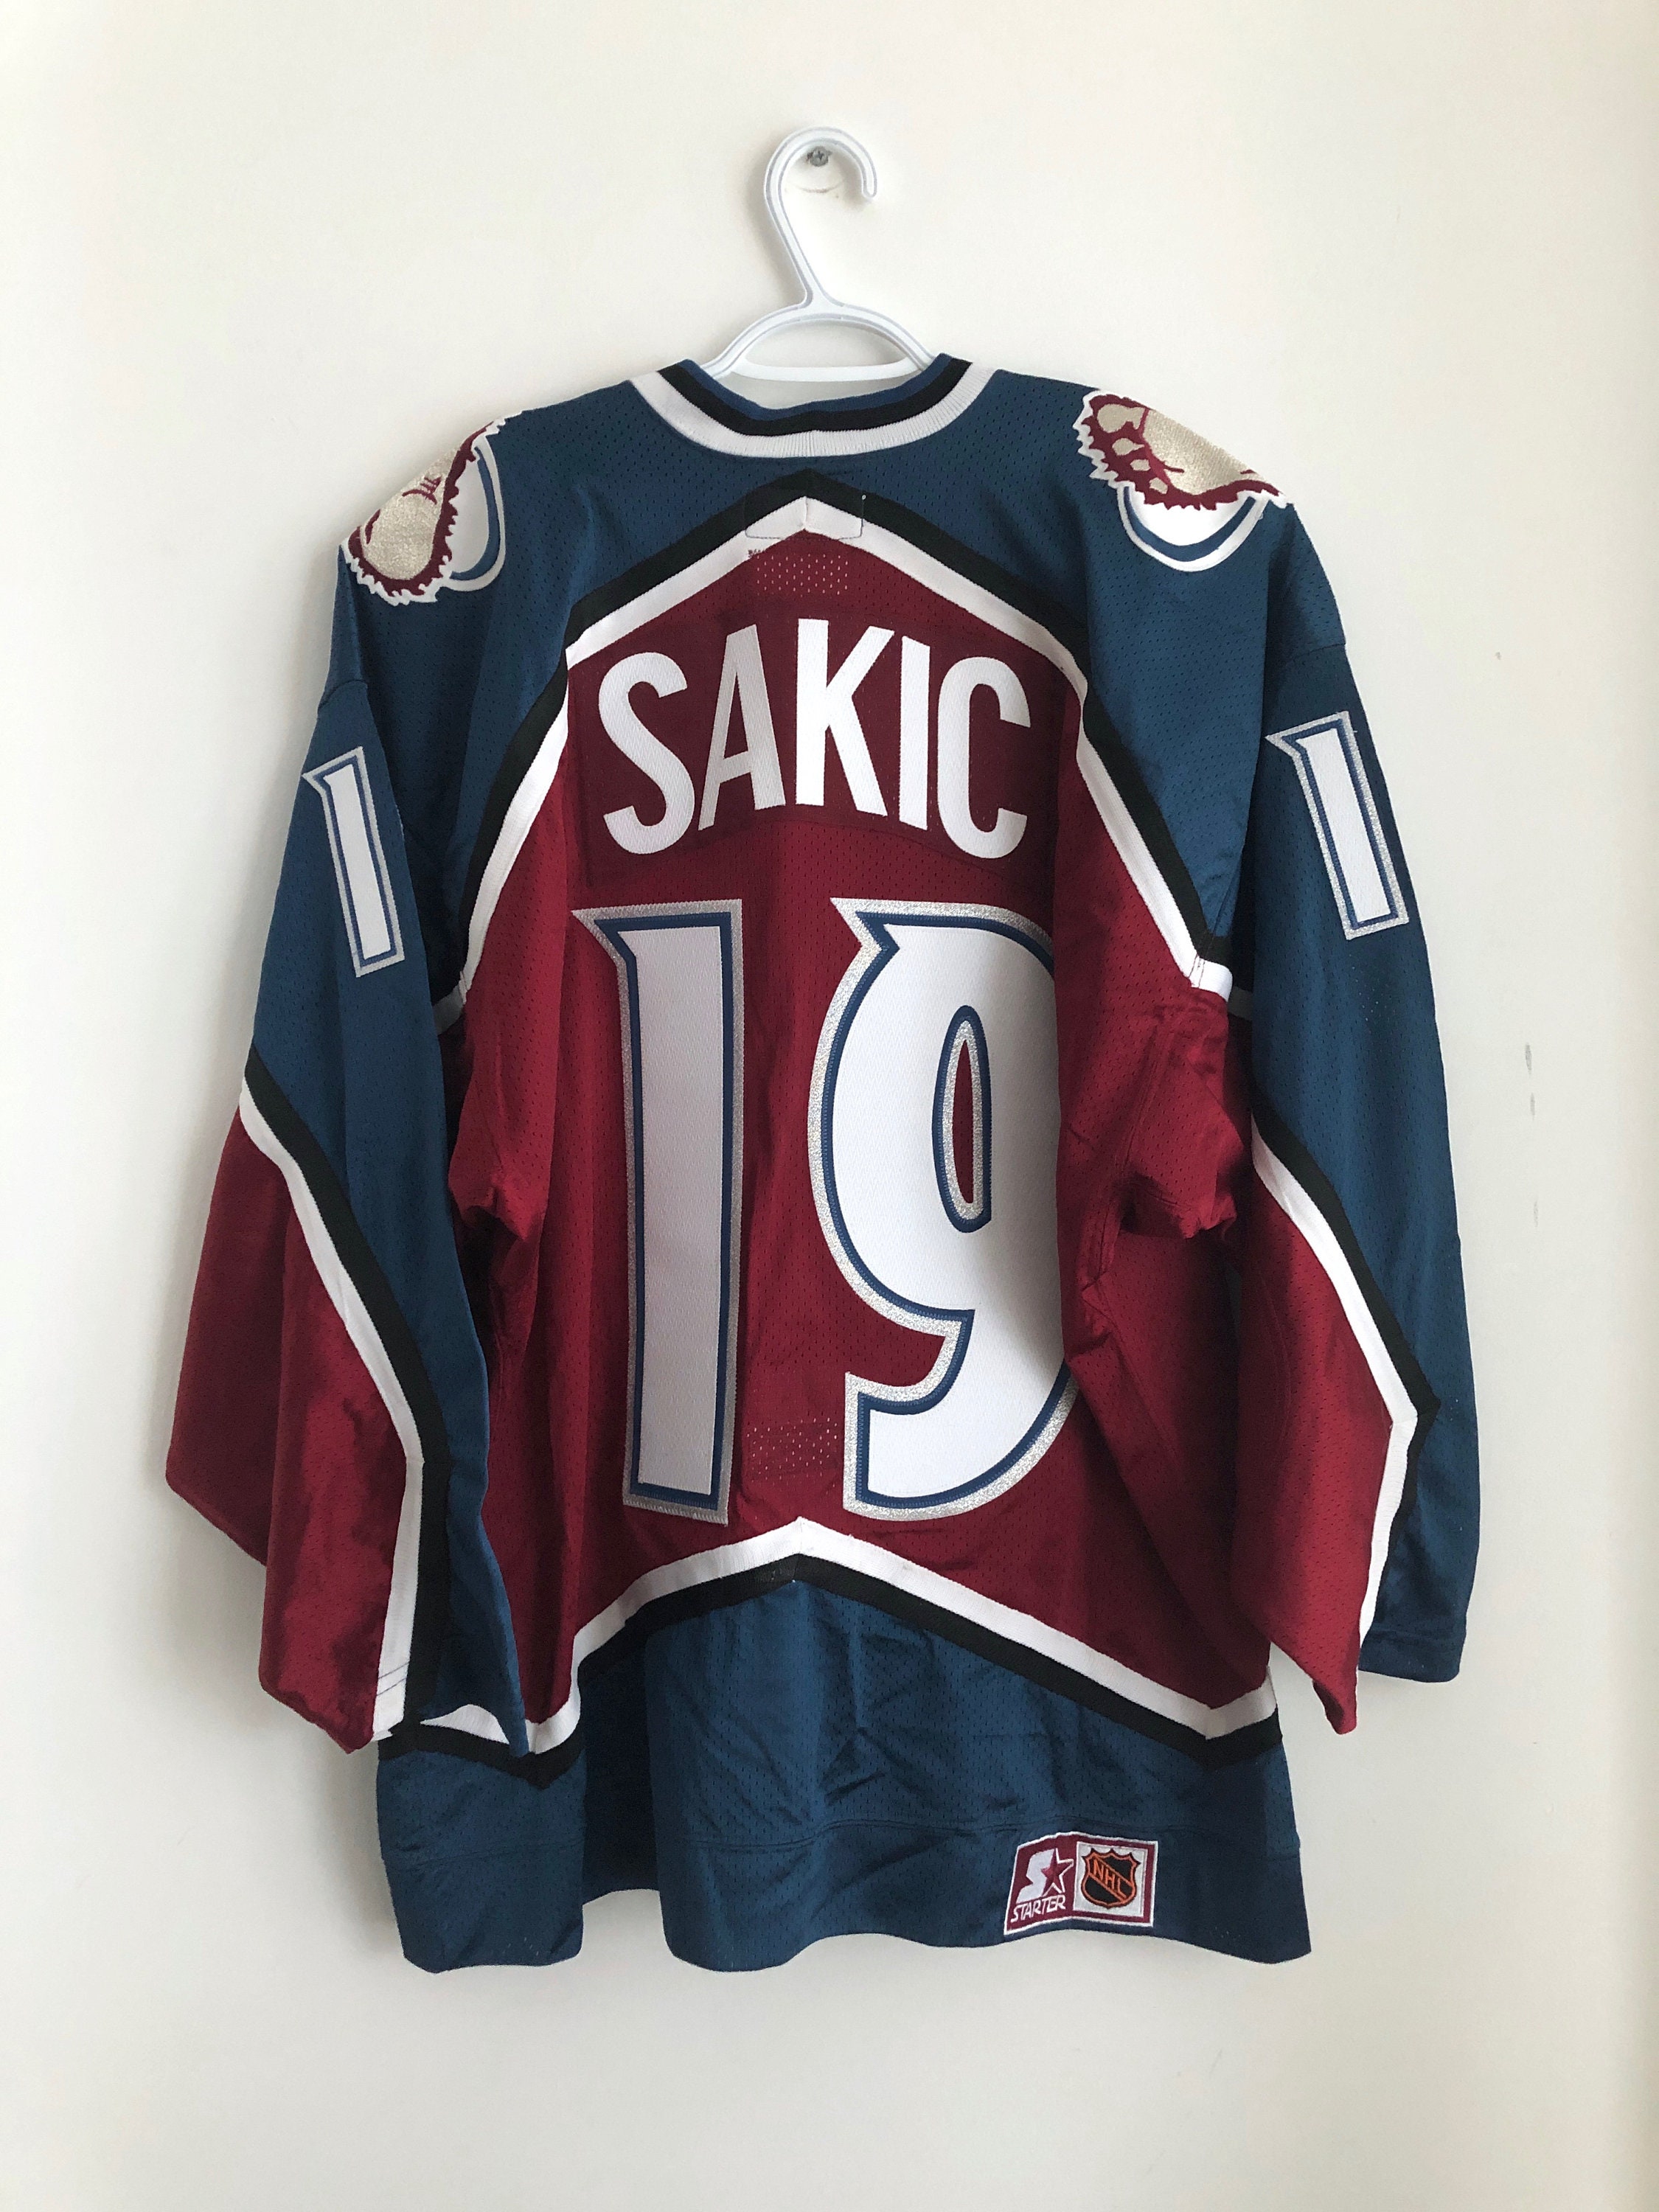 Joe Sakic Autographed Colorado Avalanche Replica Jersey